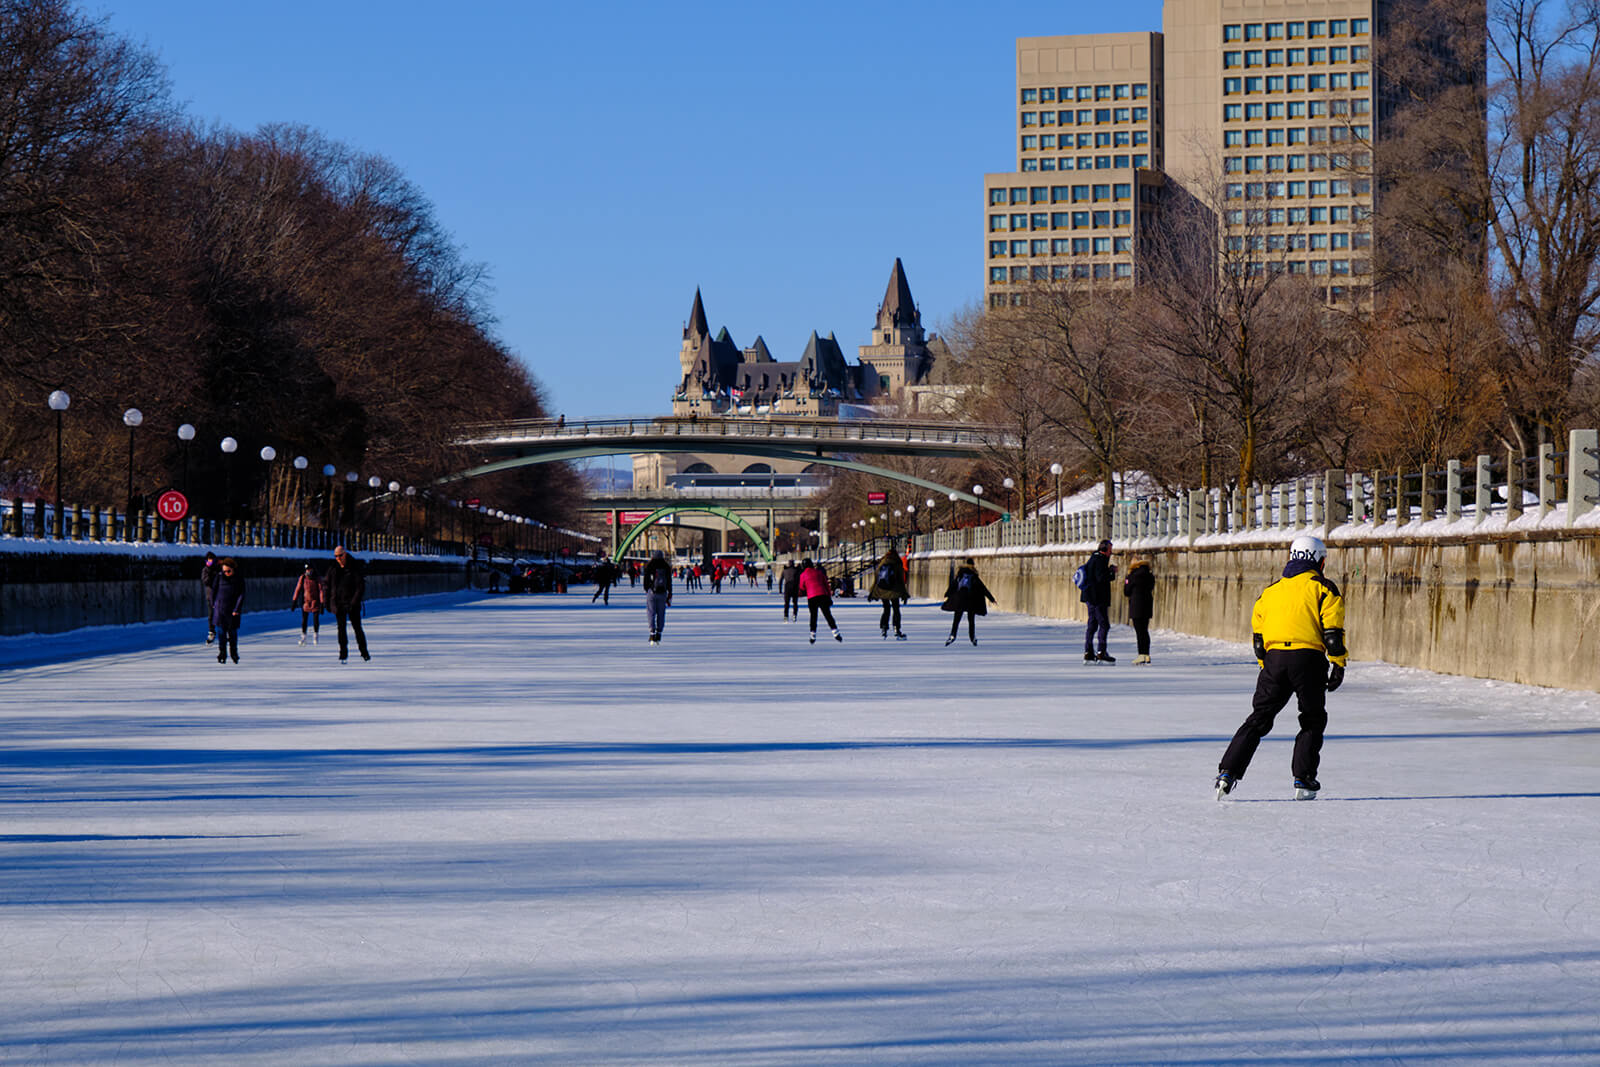 Safe Winter Activities to Enjoy in Ottawa